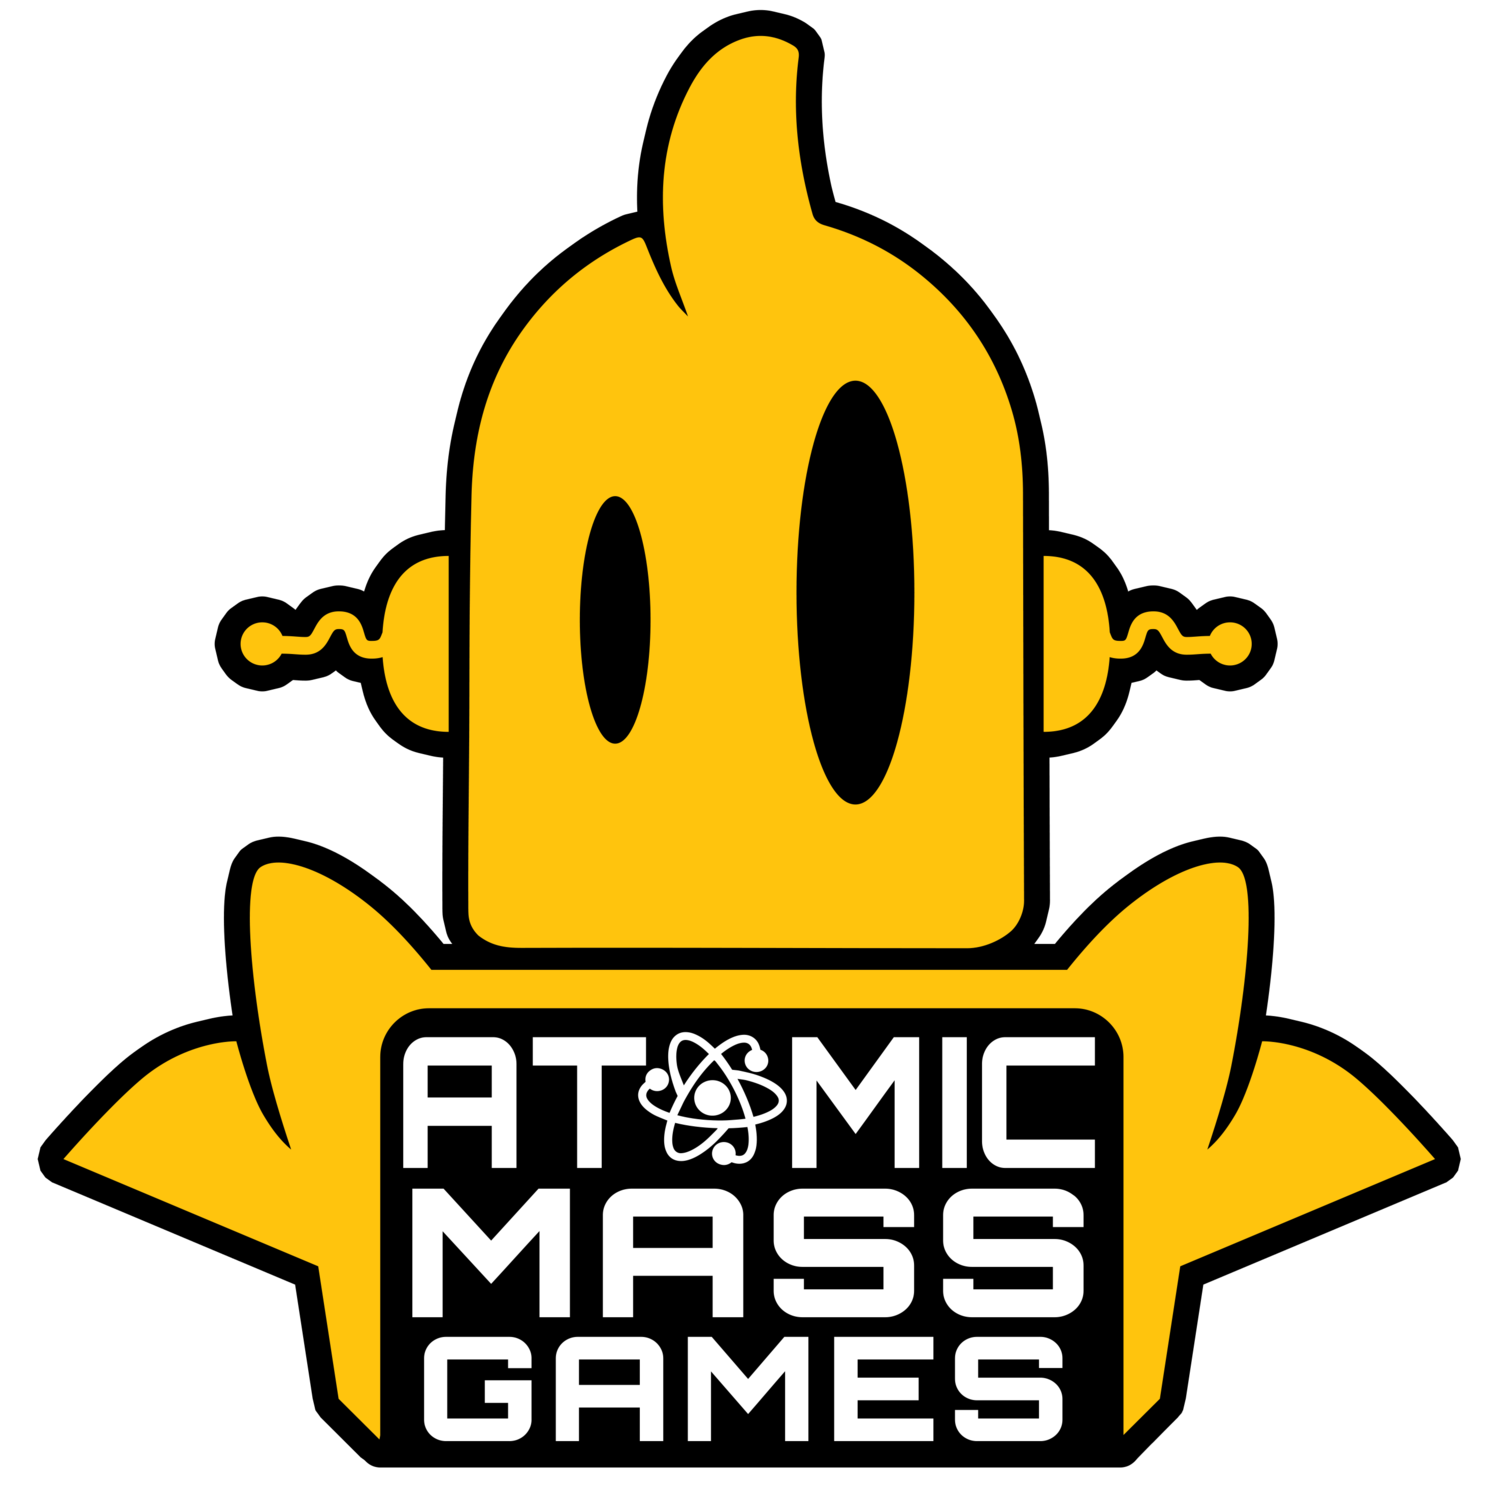 Brand: Atomic Mass Games